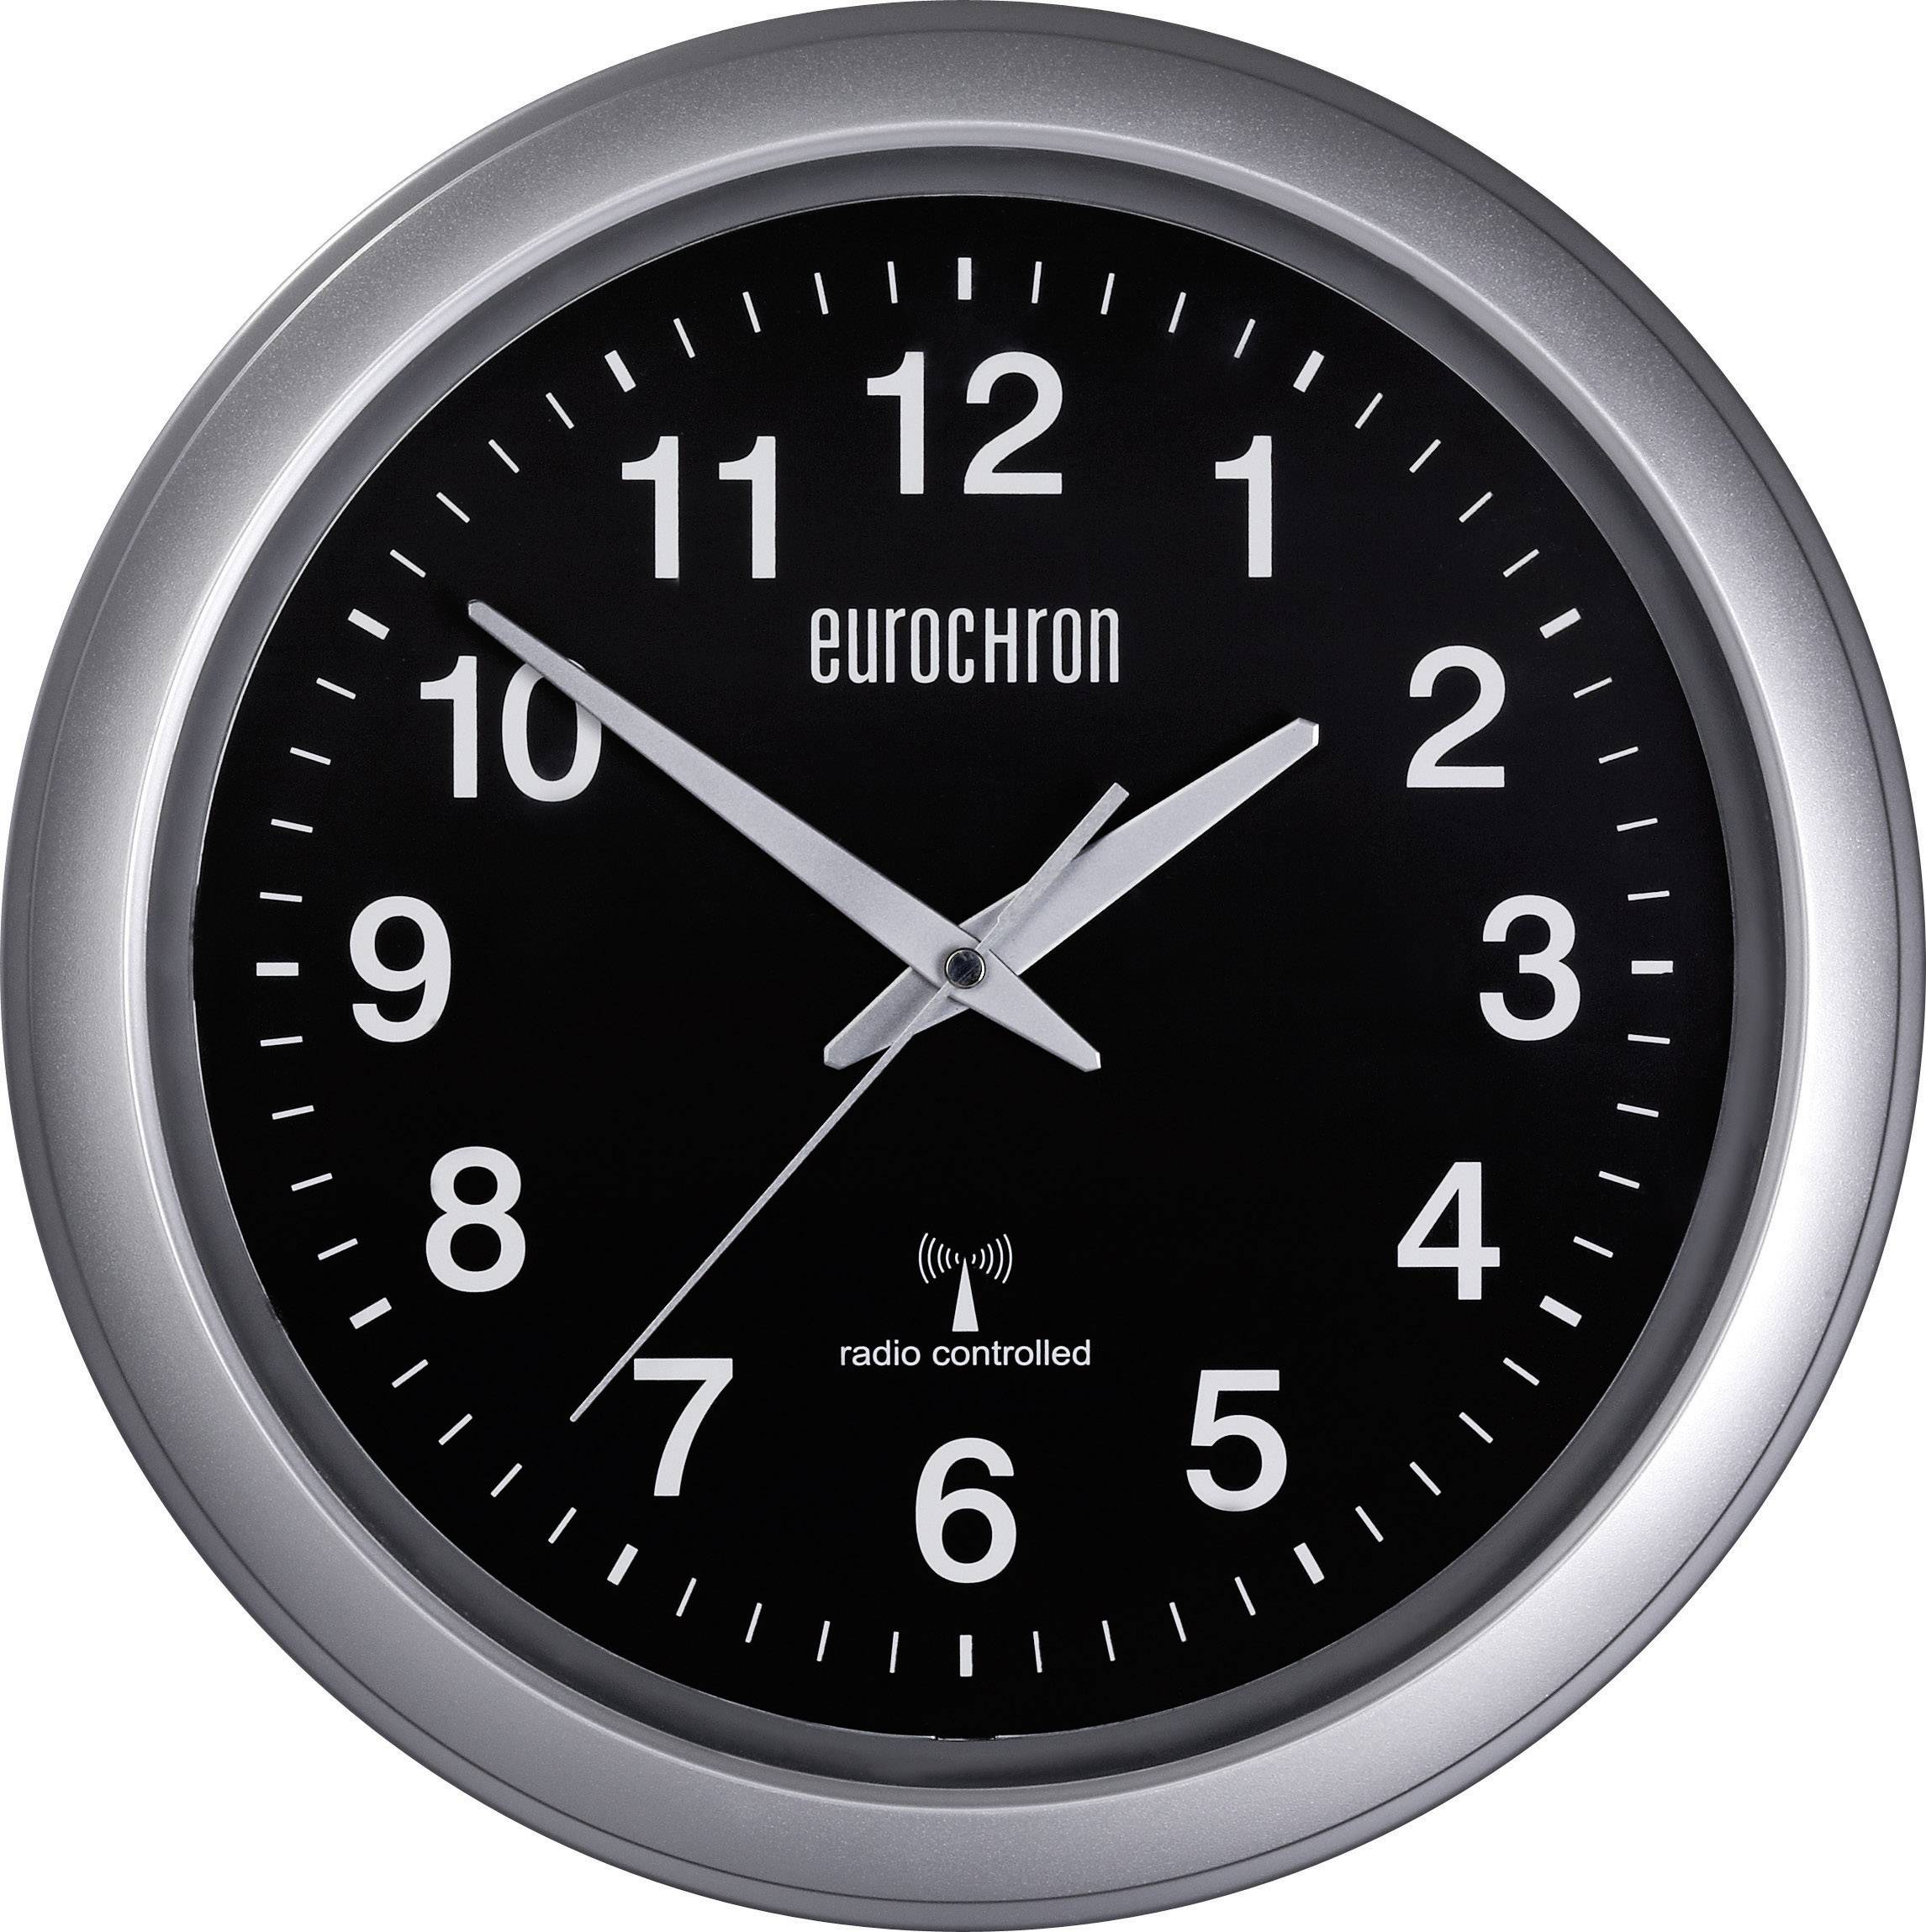 Watch control. Eurochron часы. Radio Controlled Clock. Часы настенные Eurochron. Часы SWC.